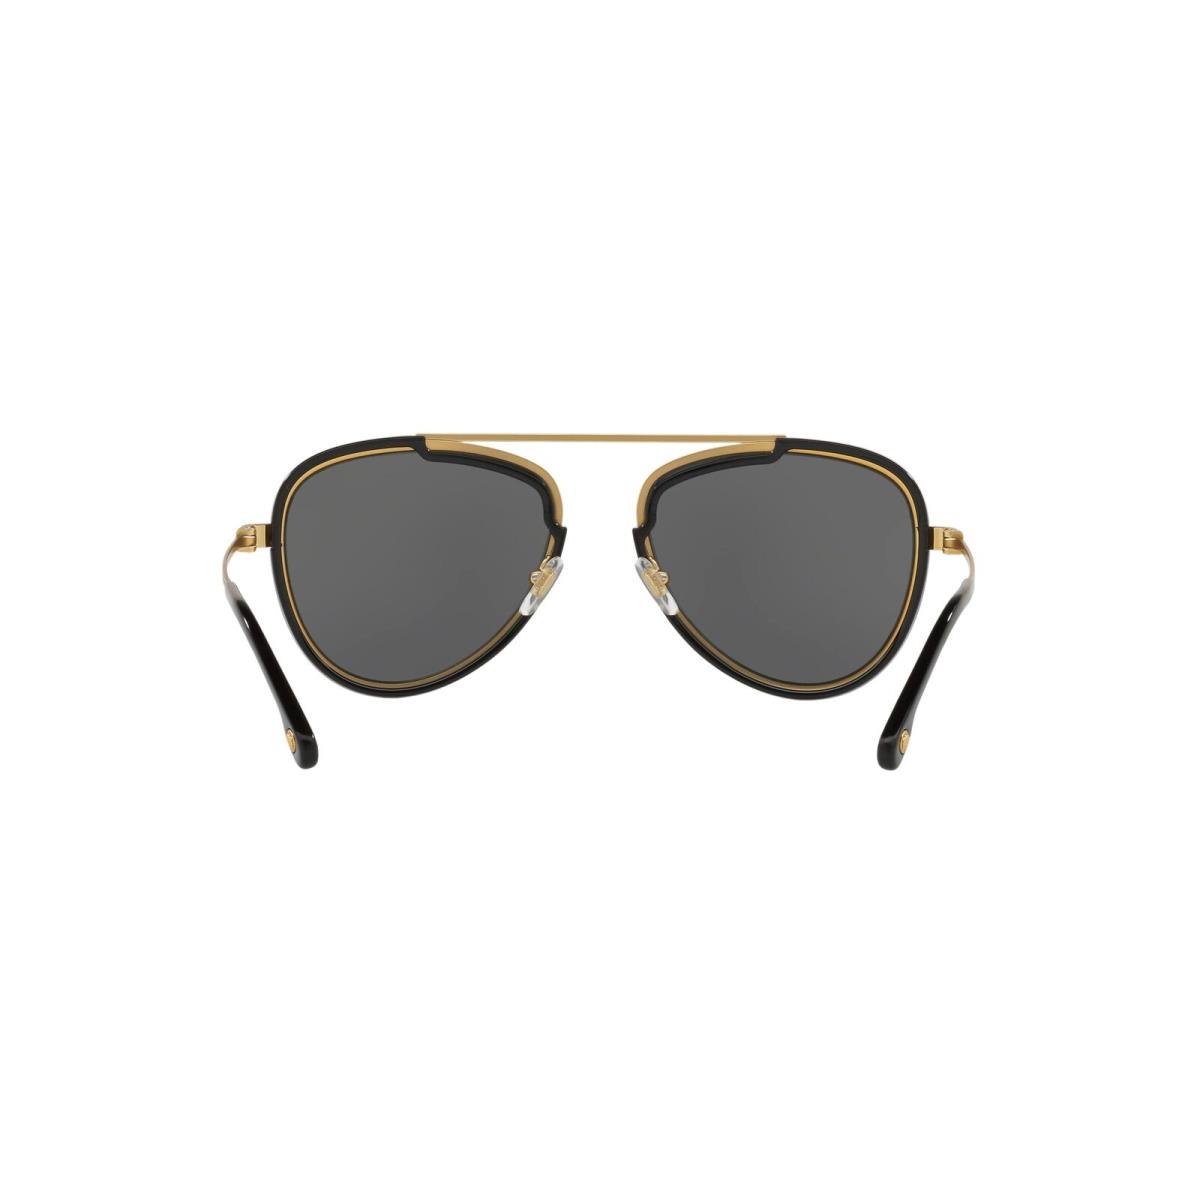 Versace sunglasses Aviator - Gold/Black , Black Frame, Gray Lens